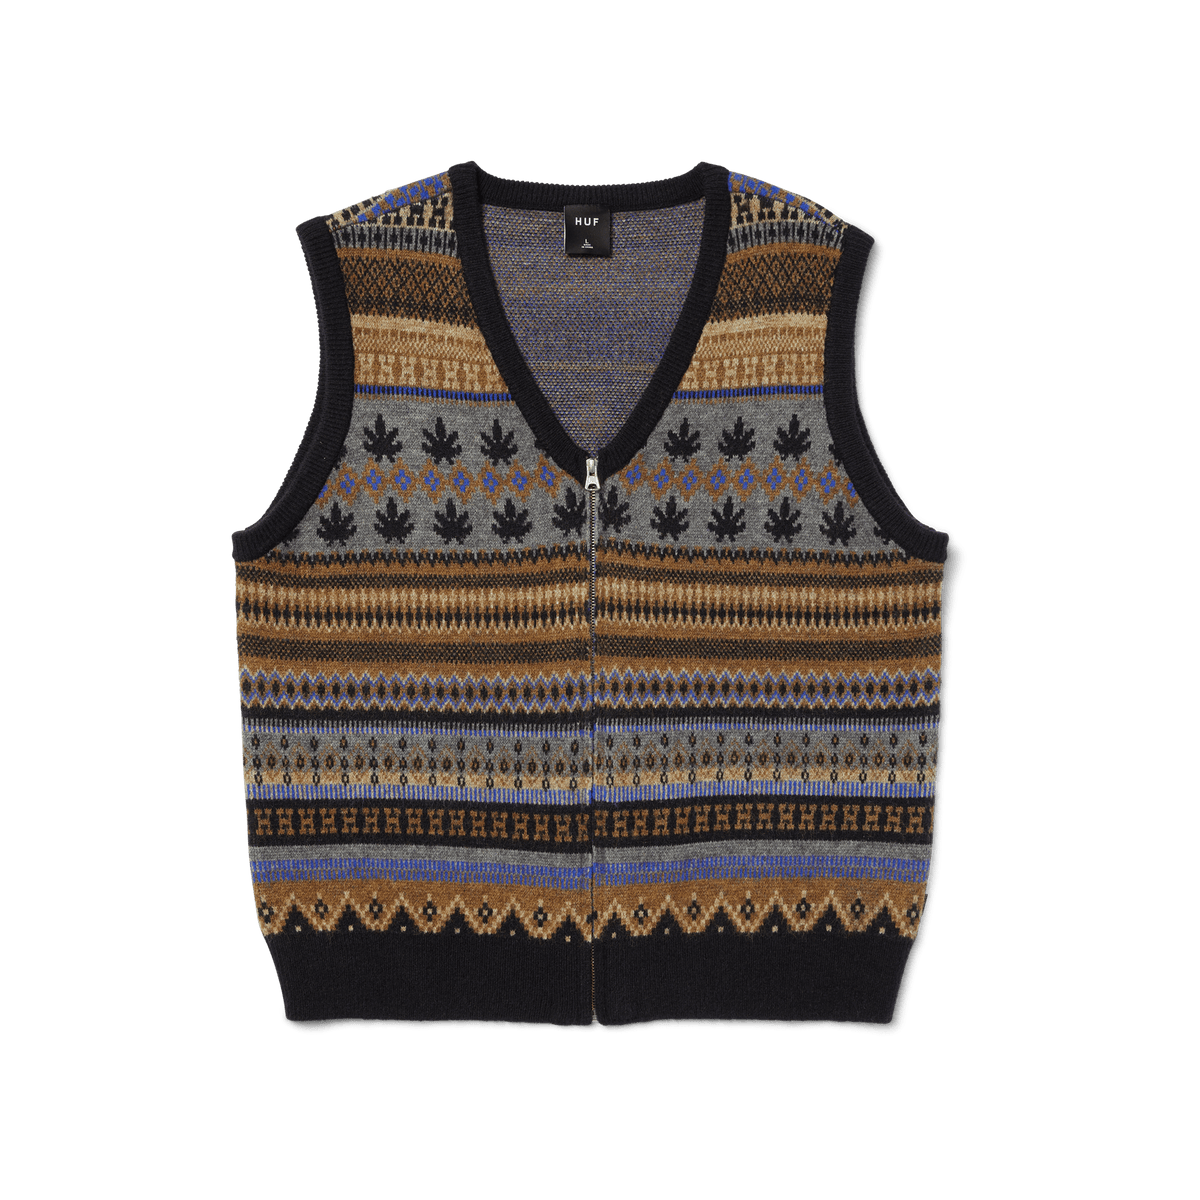 Huf Gilbert Sweater Vest Multi KN00472 MUL